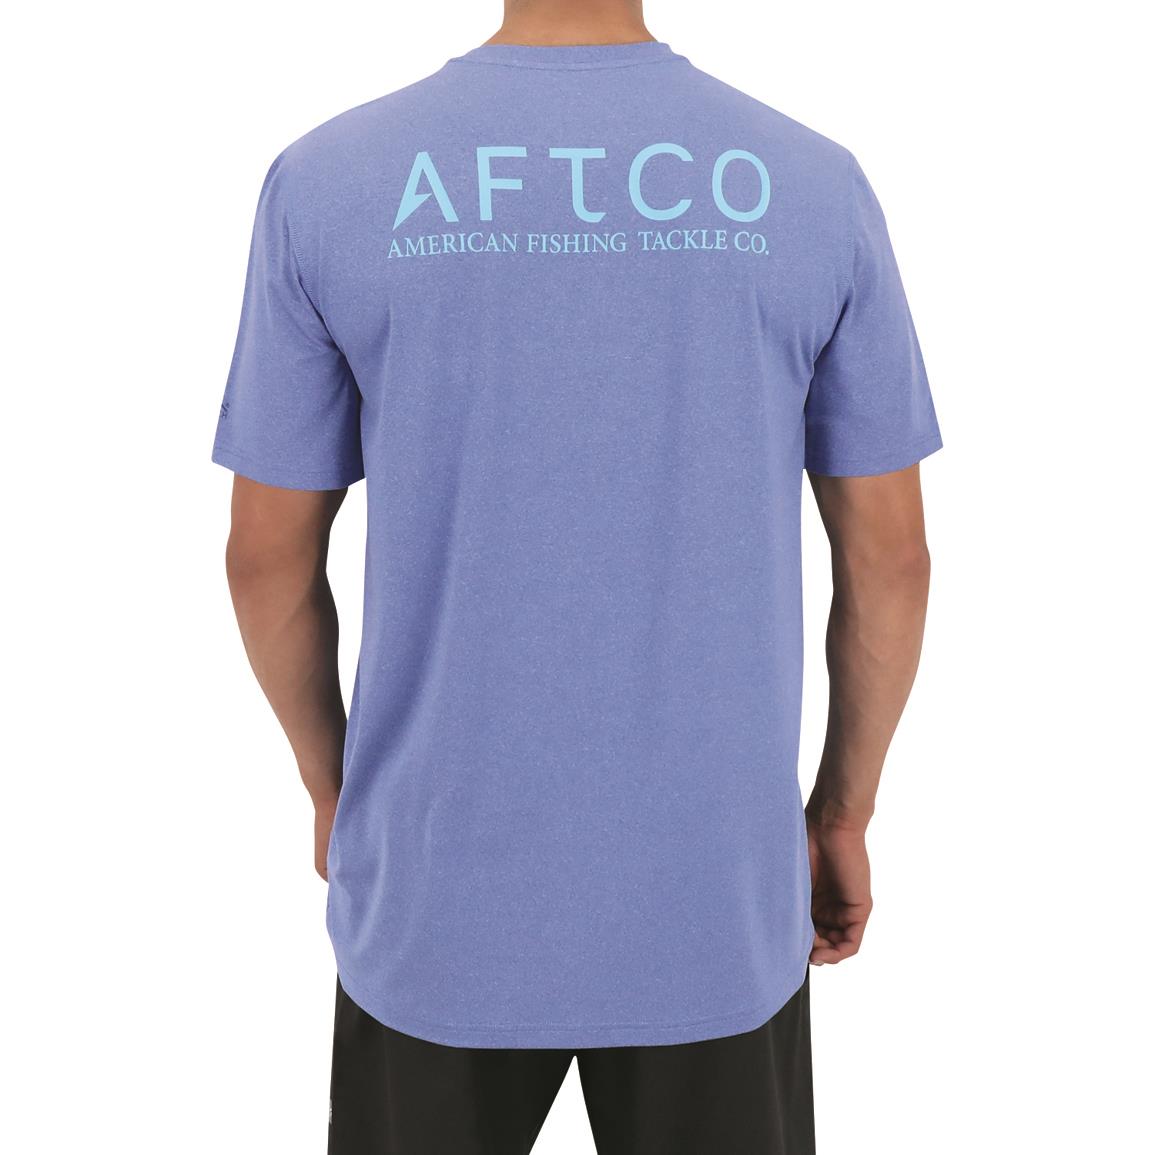 AFTCO Samurai Short-Sleeve Performance Shirt, Brillant Blue Heather